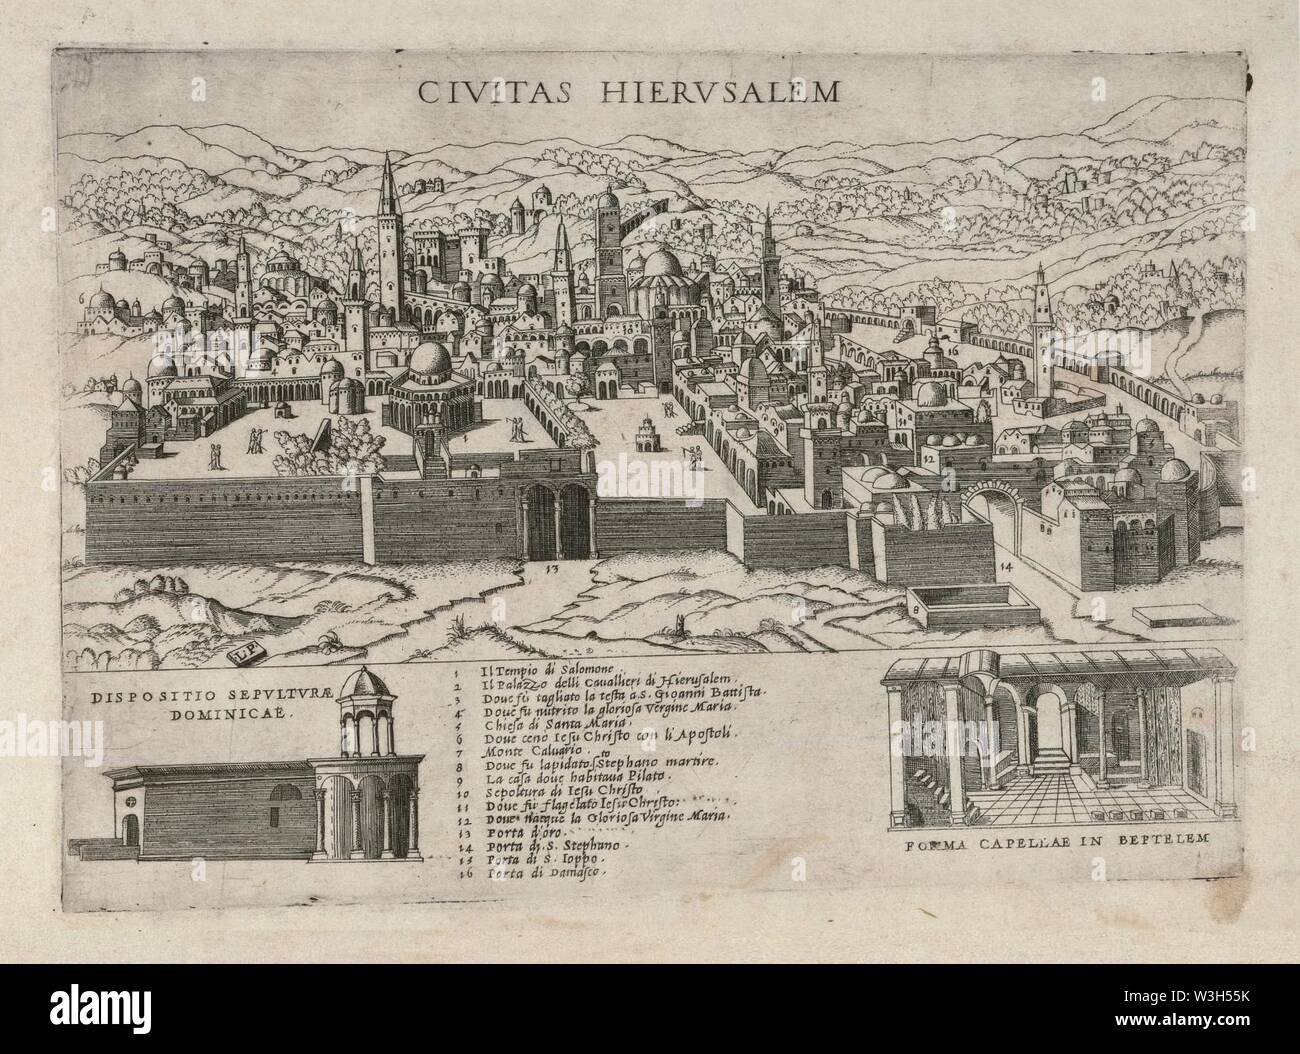 Civitas Hierusalem - L.P. Foto Stock